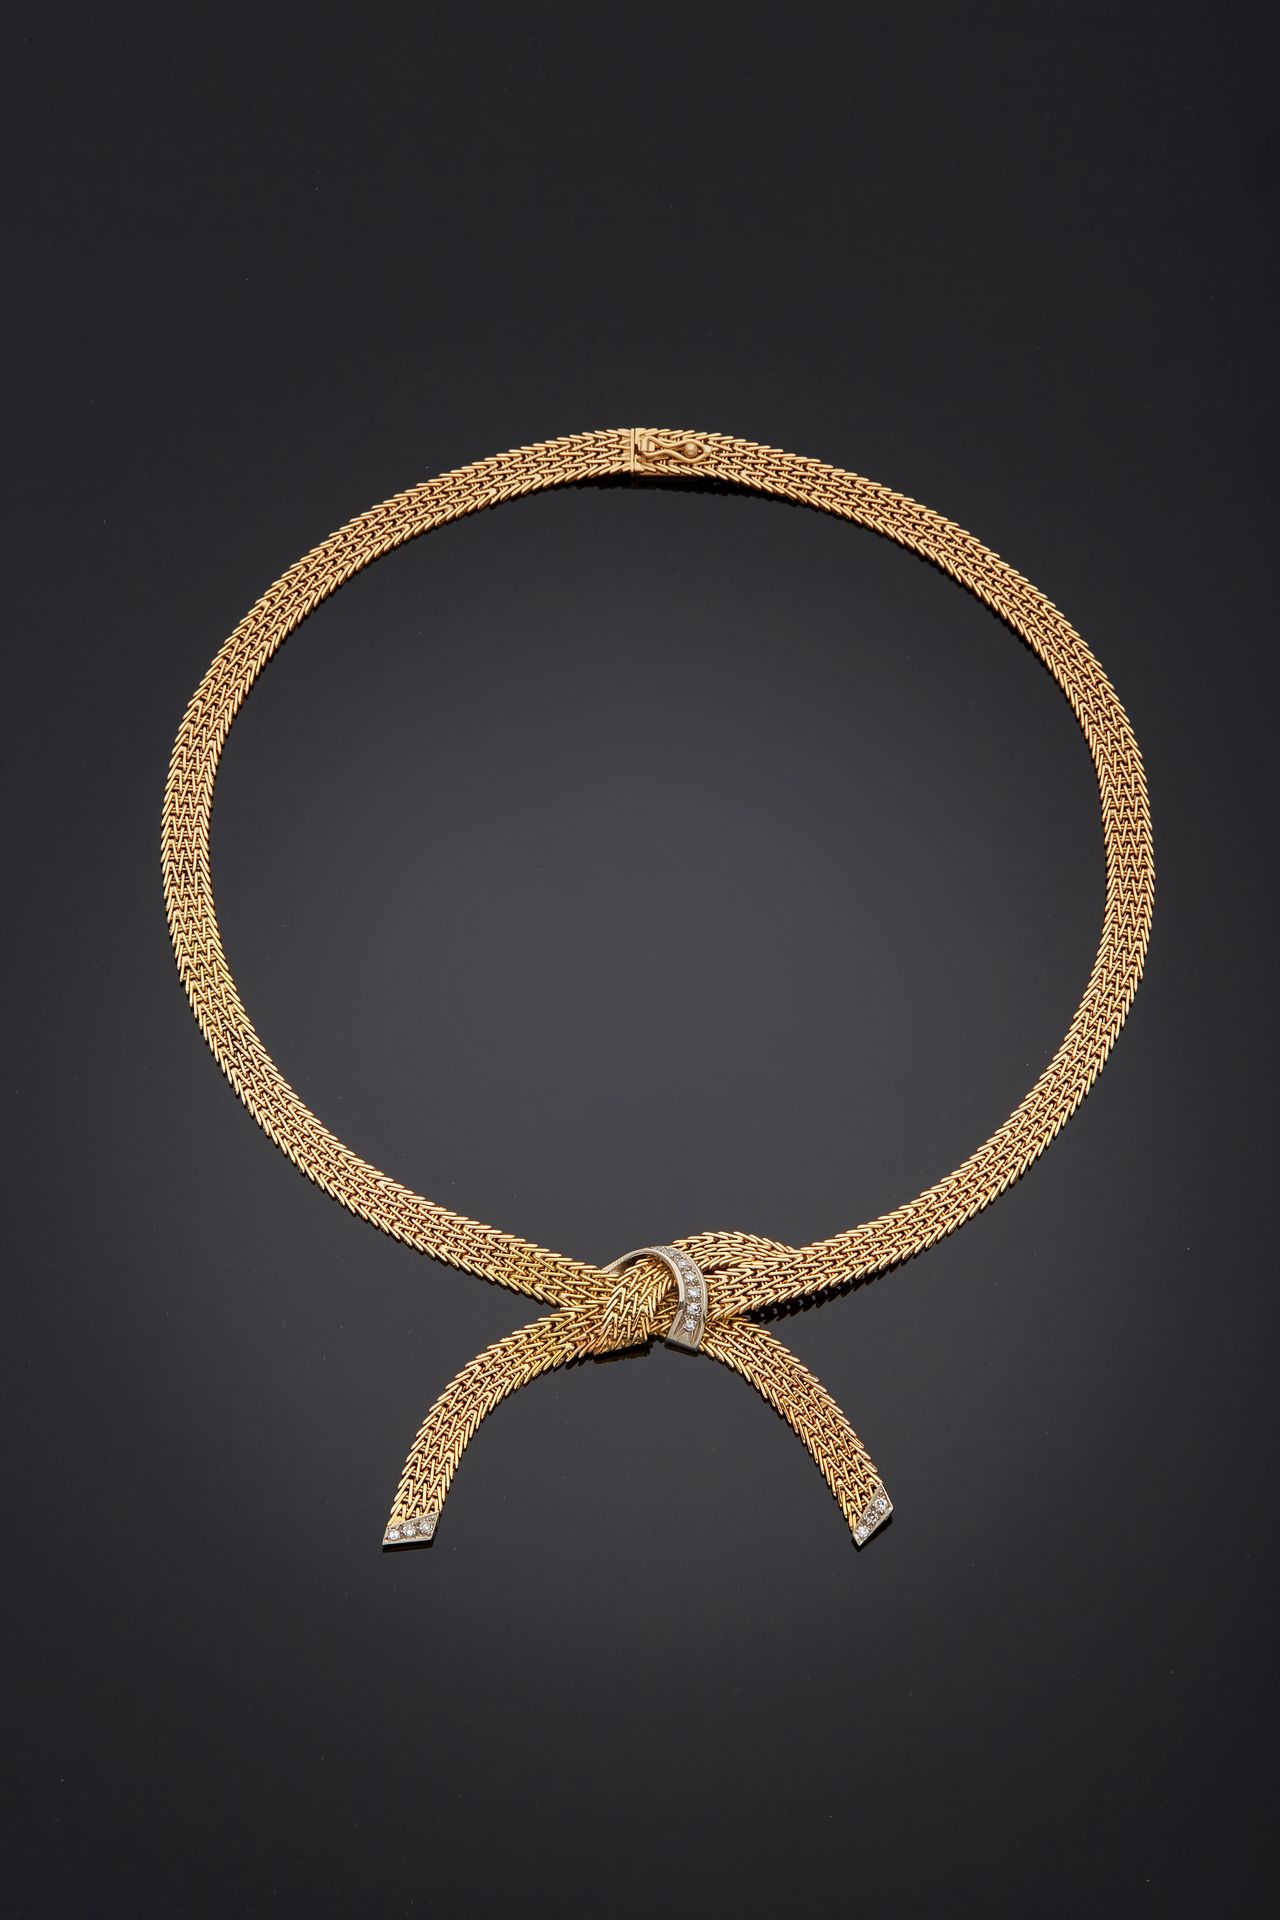 Null 一条750毫米的黄金项链，有一个平坦的铰链，形成一个交叉结的图案，并由一个镶嵌有八分之一钻石的链接加强。
约1960年的法国作品。
长度：42厘米
毛&hellip;